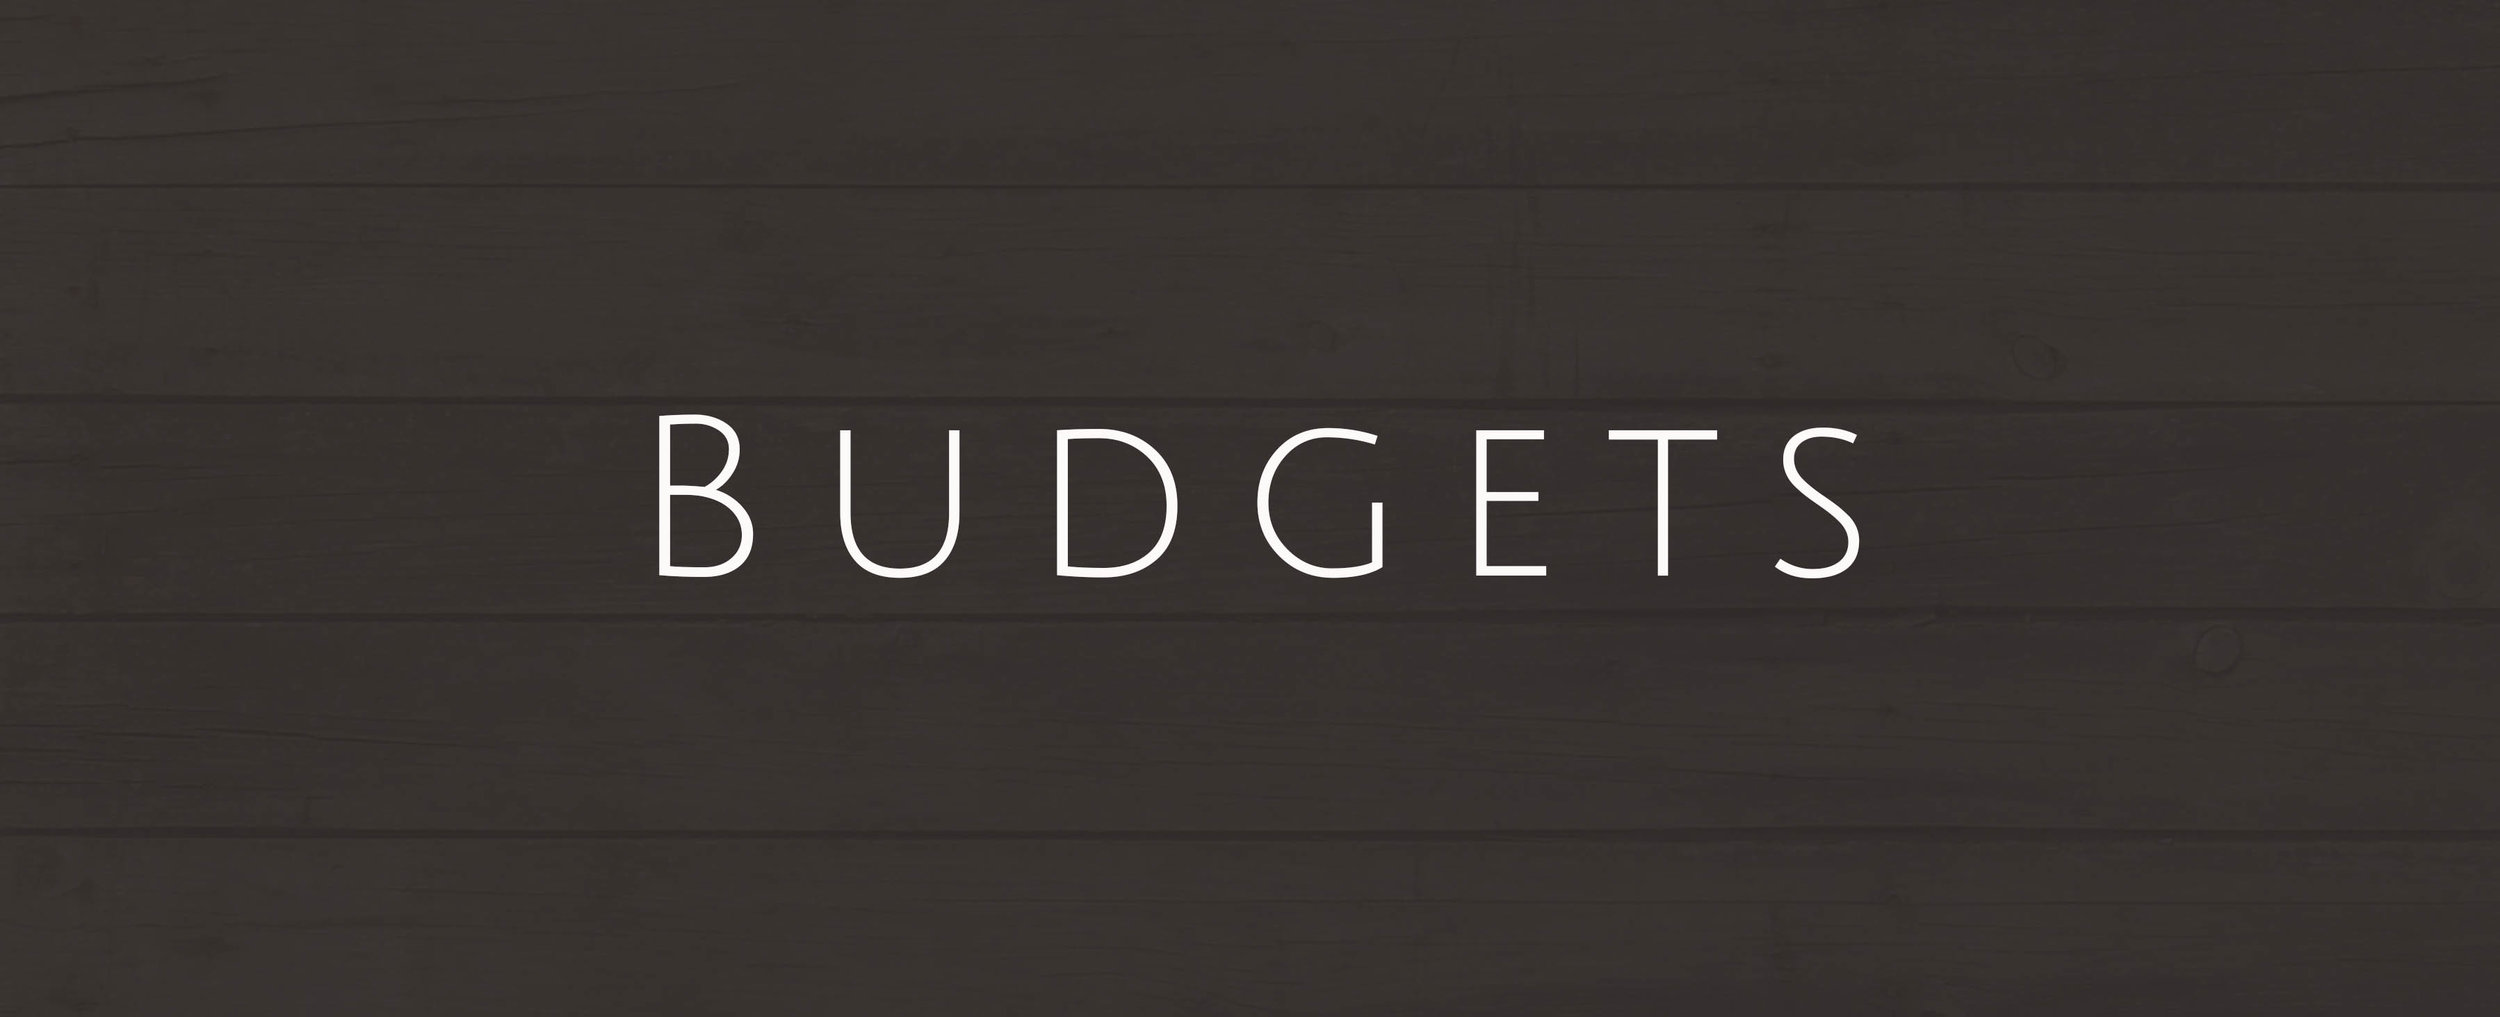 All - Budgets.jpg